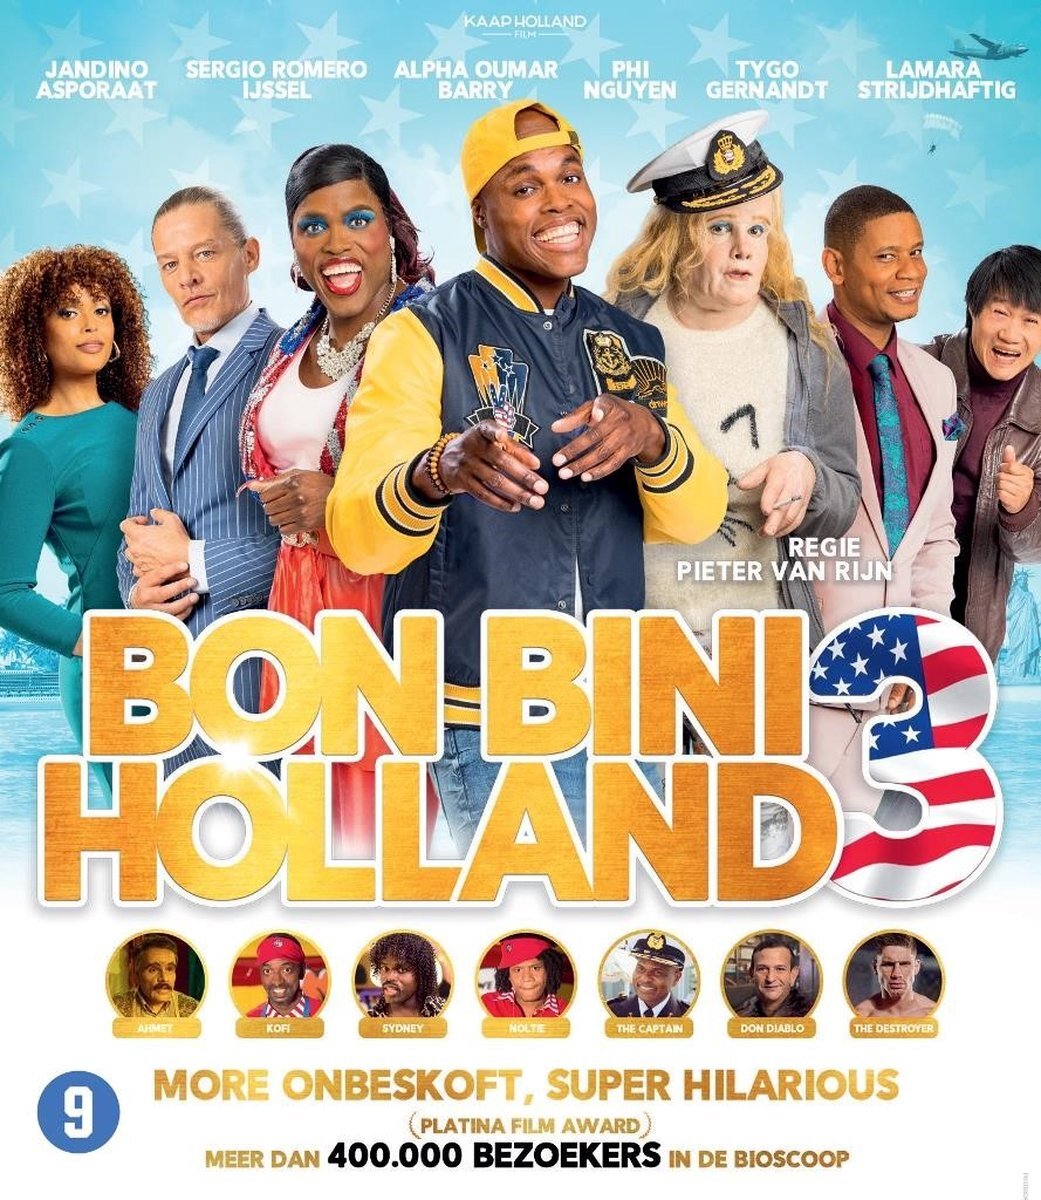 WW ENTERTAINMENT Bon Bini Holland 3 (Blu-ray)